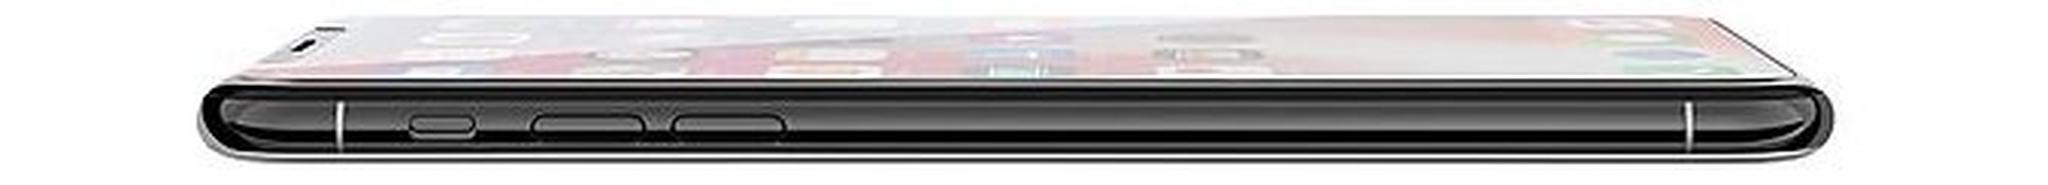 Belkin iPhone X InvisiGlass Overlay Ultra Glass Screen Protector - Clear